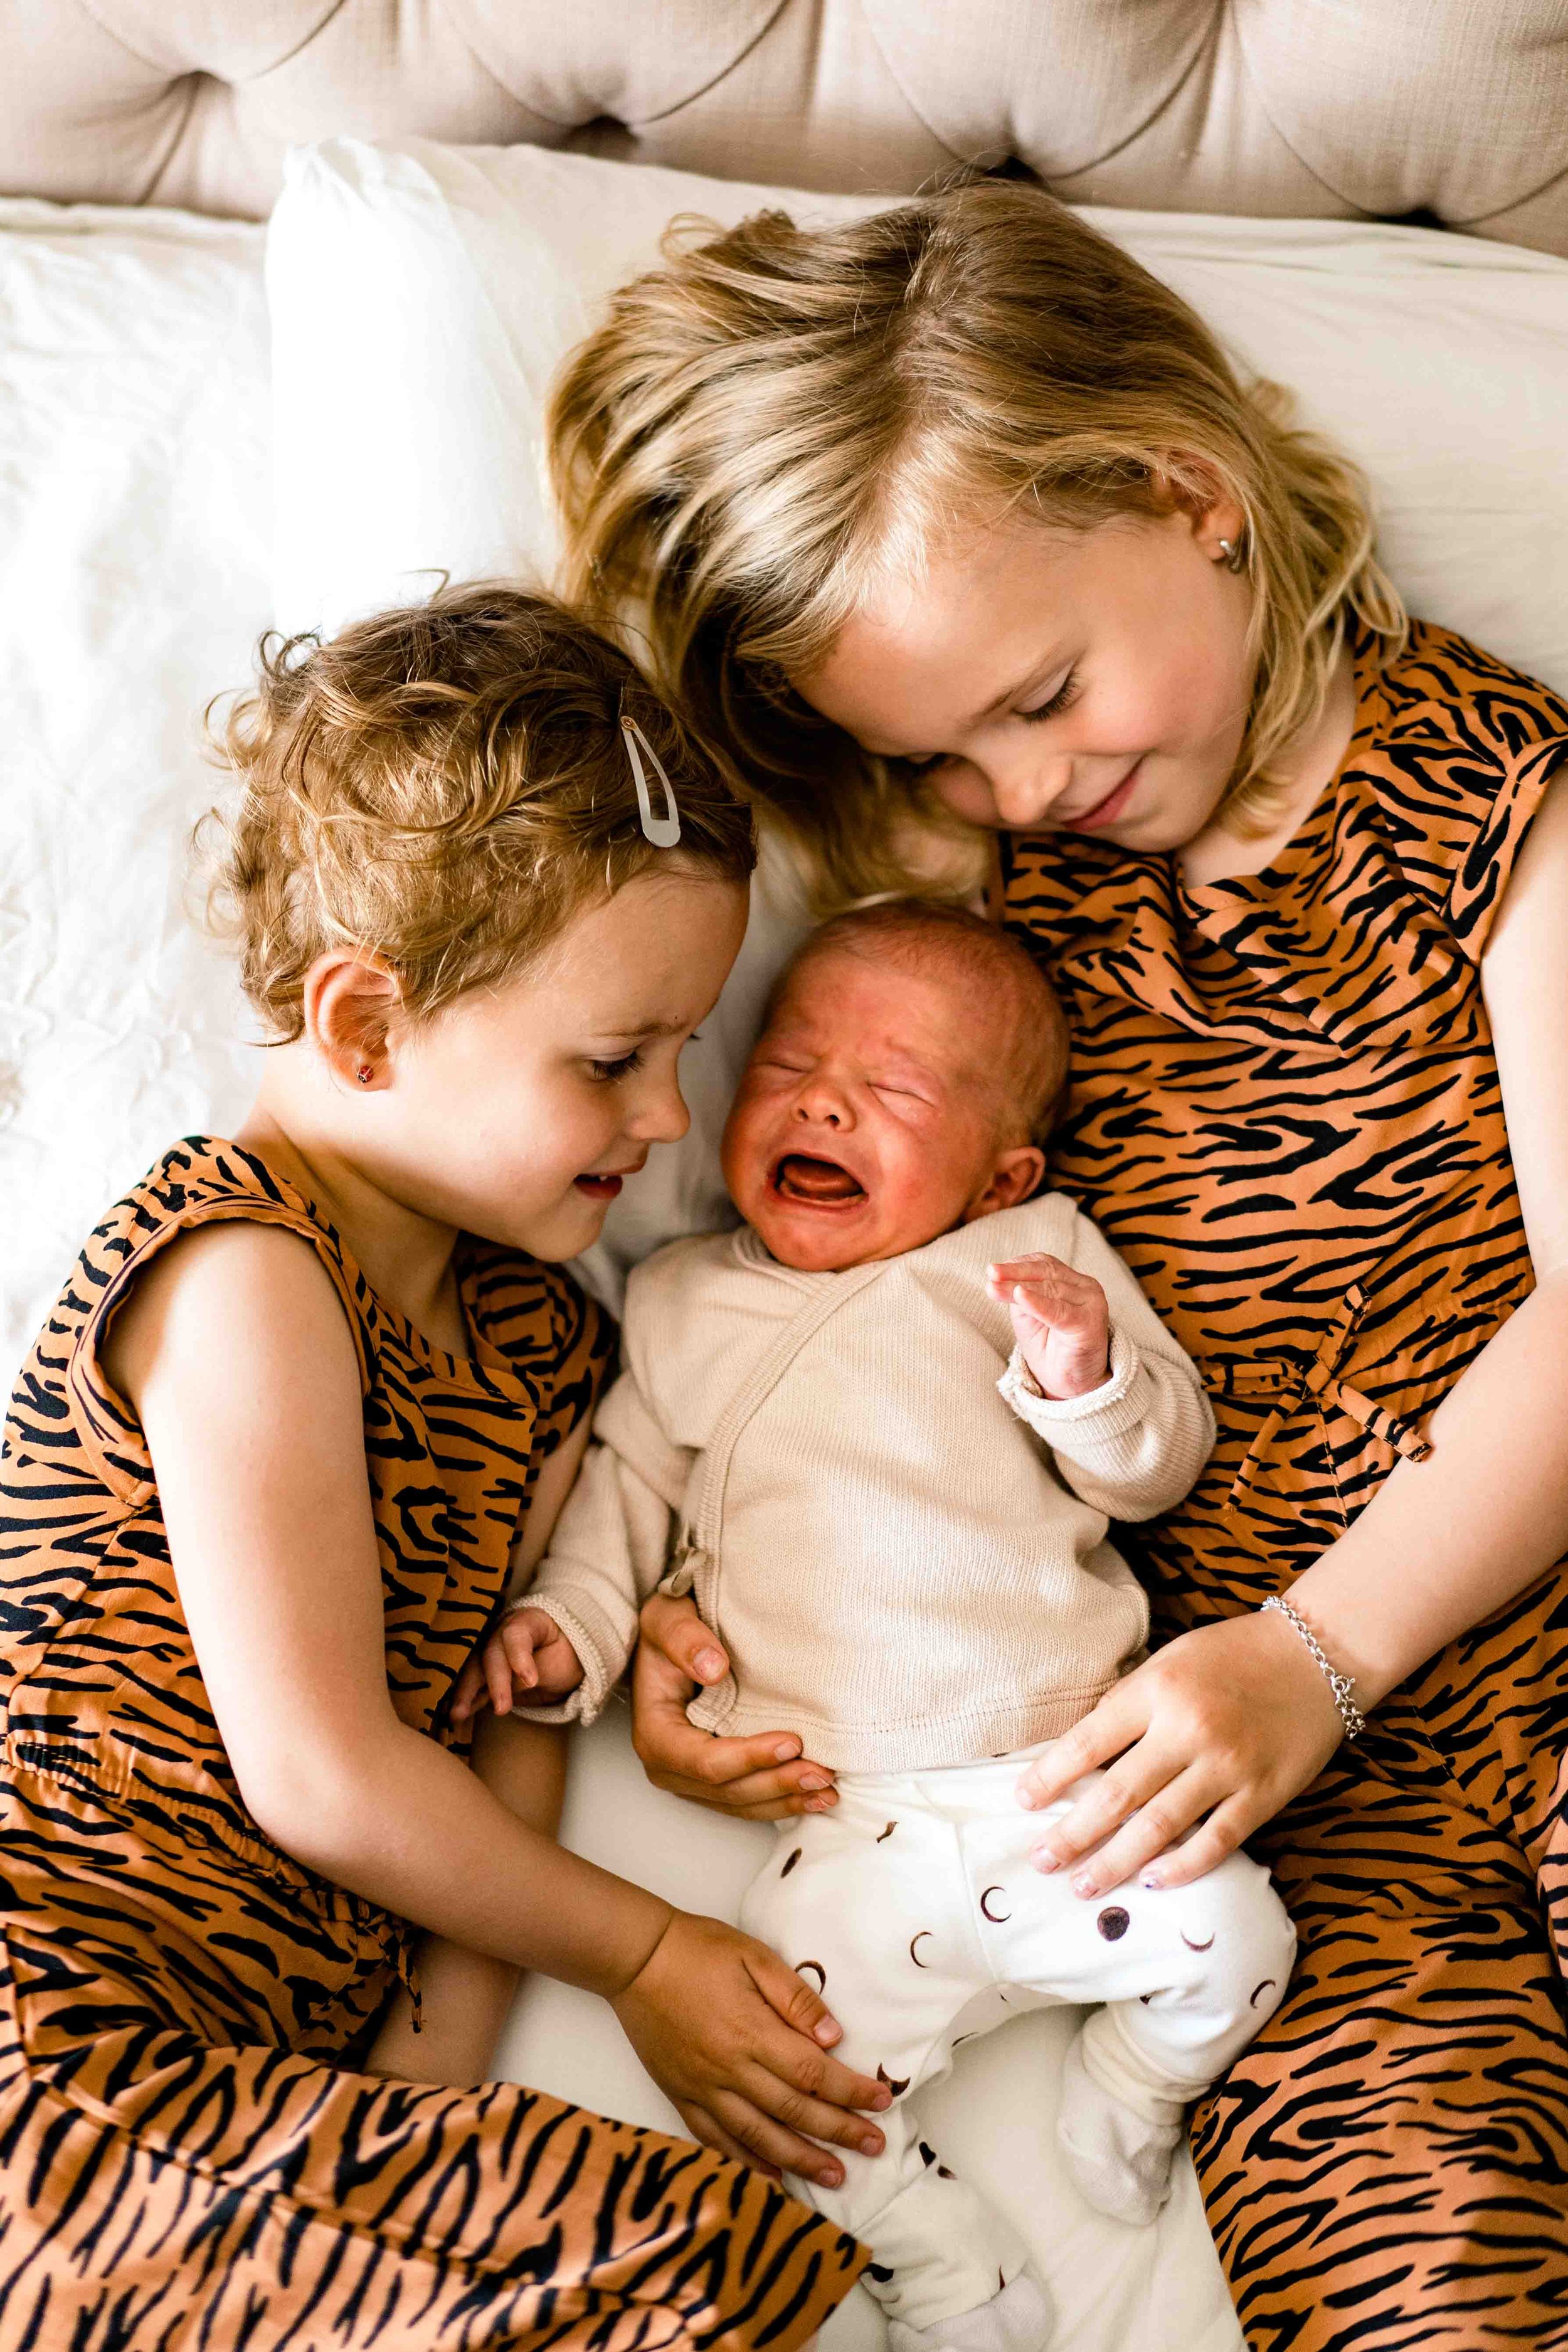 vankellyshand-familie-newborn-fotograaf-fotoshoot-4769.jpg